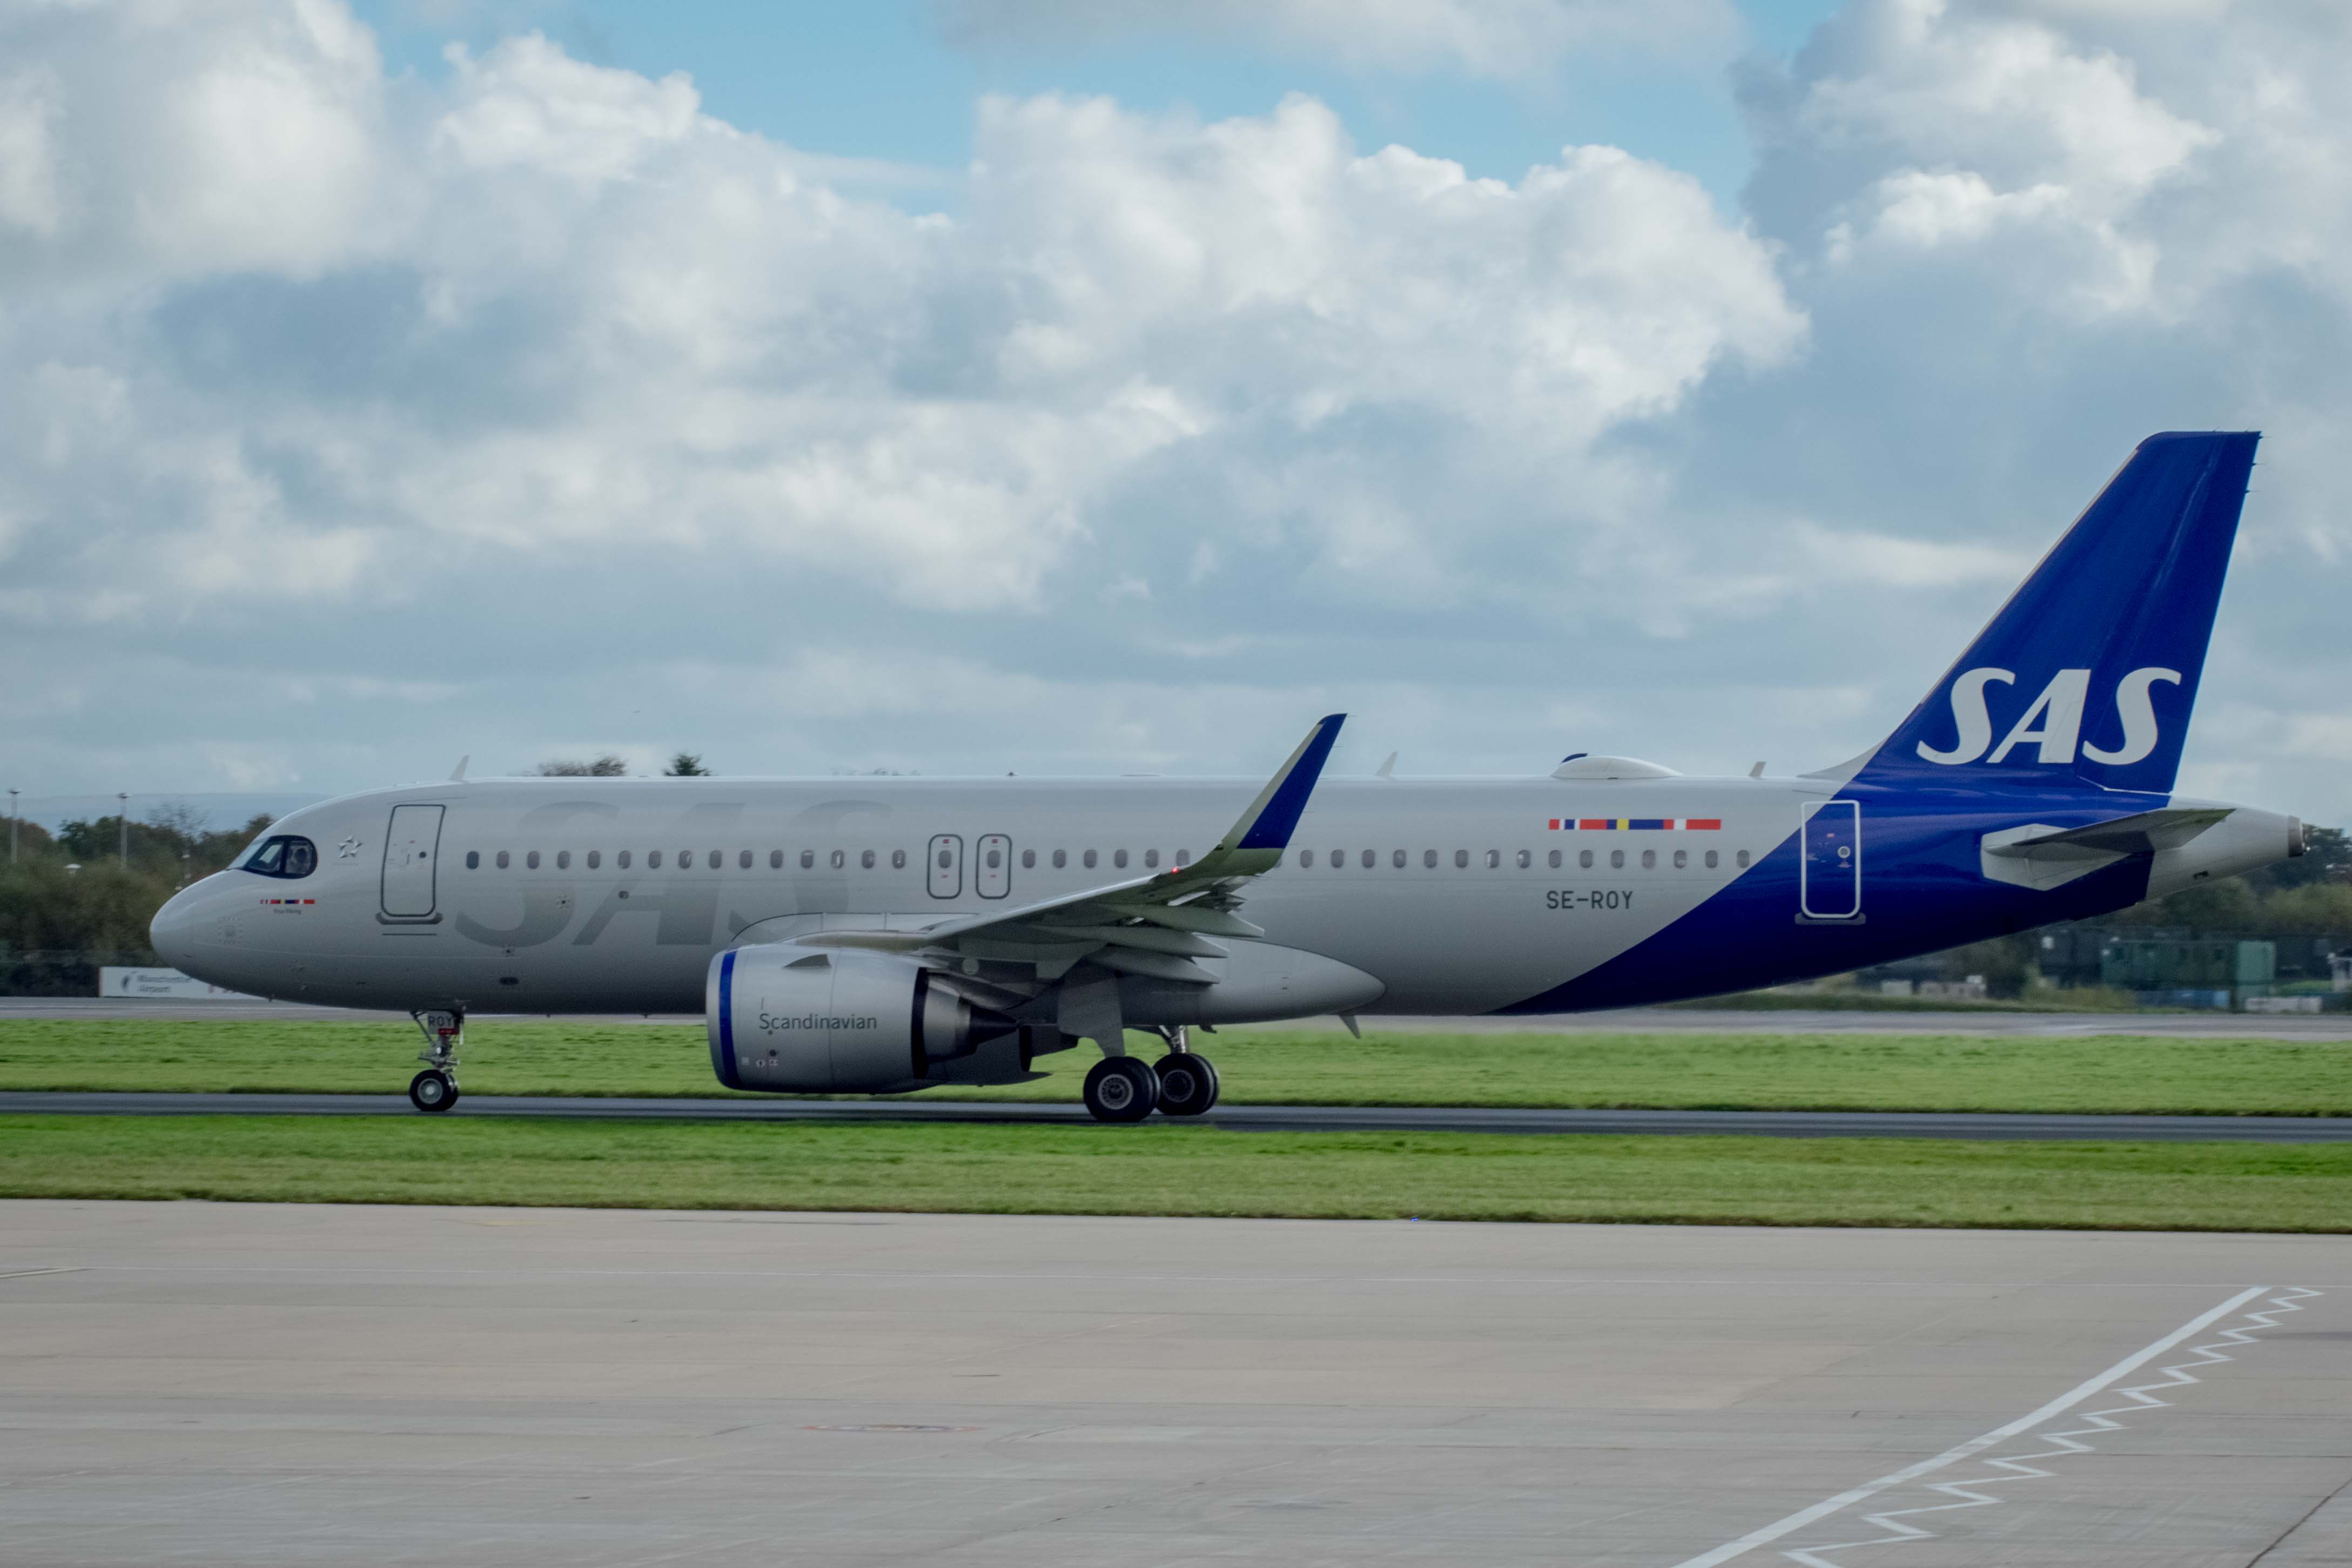 SE-ROY/SEROY SAS Scandinavian Airlines Airbus A320neo Airframe Information - AVSpotters.com